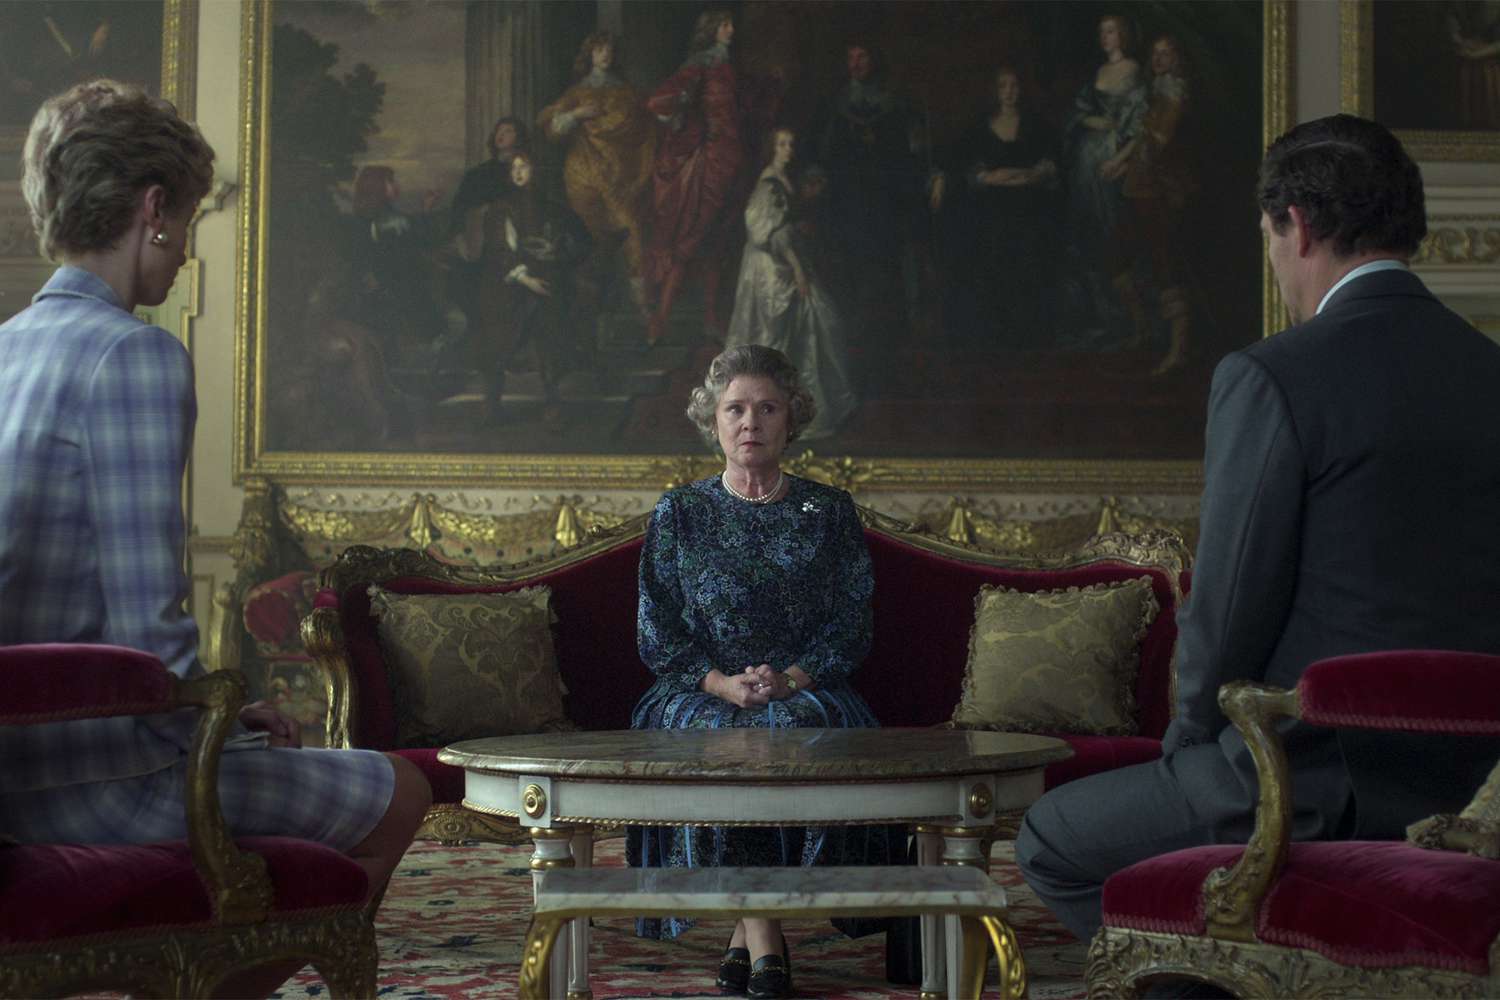 Imelda Staunton as Queen Elizabeth II in Season 5 of The Crown